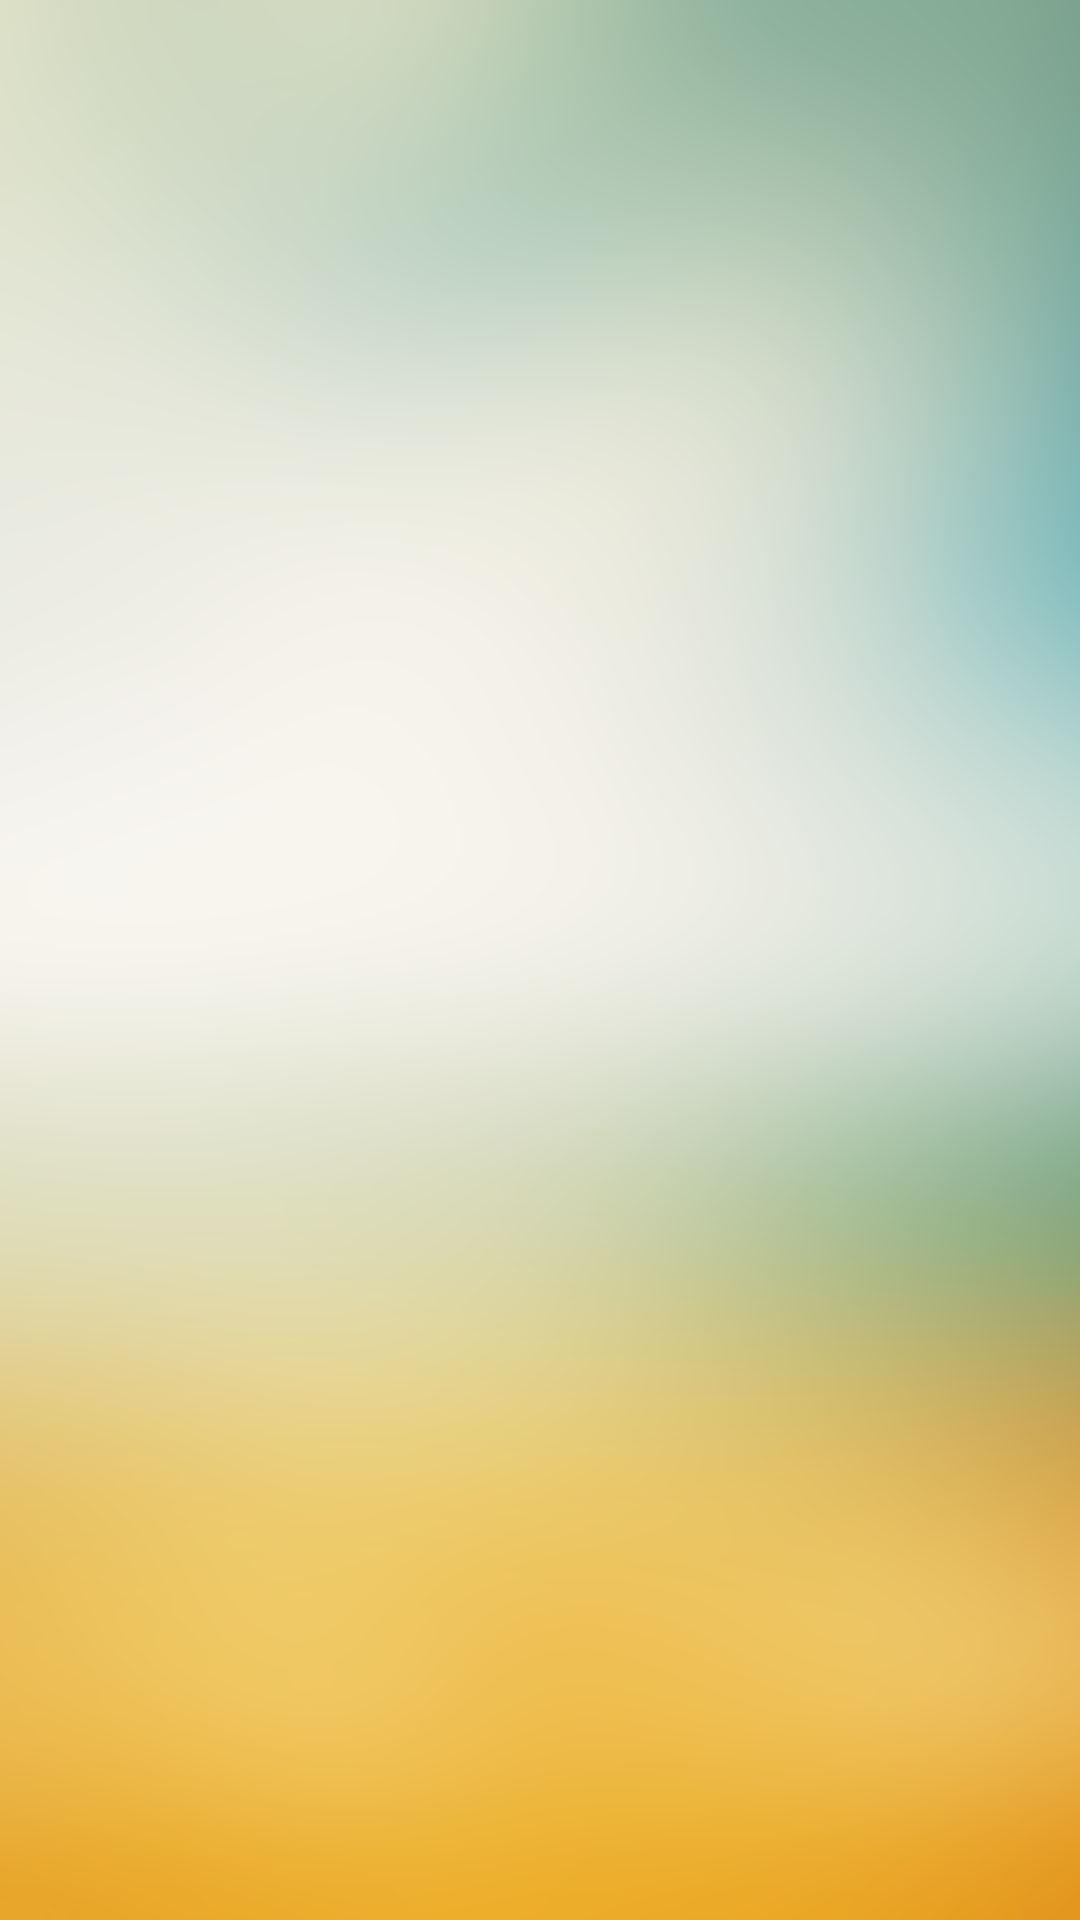 Ocean Beach Blur HTC Android Wallpaper free download